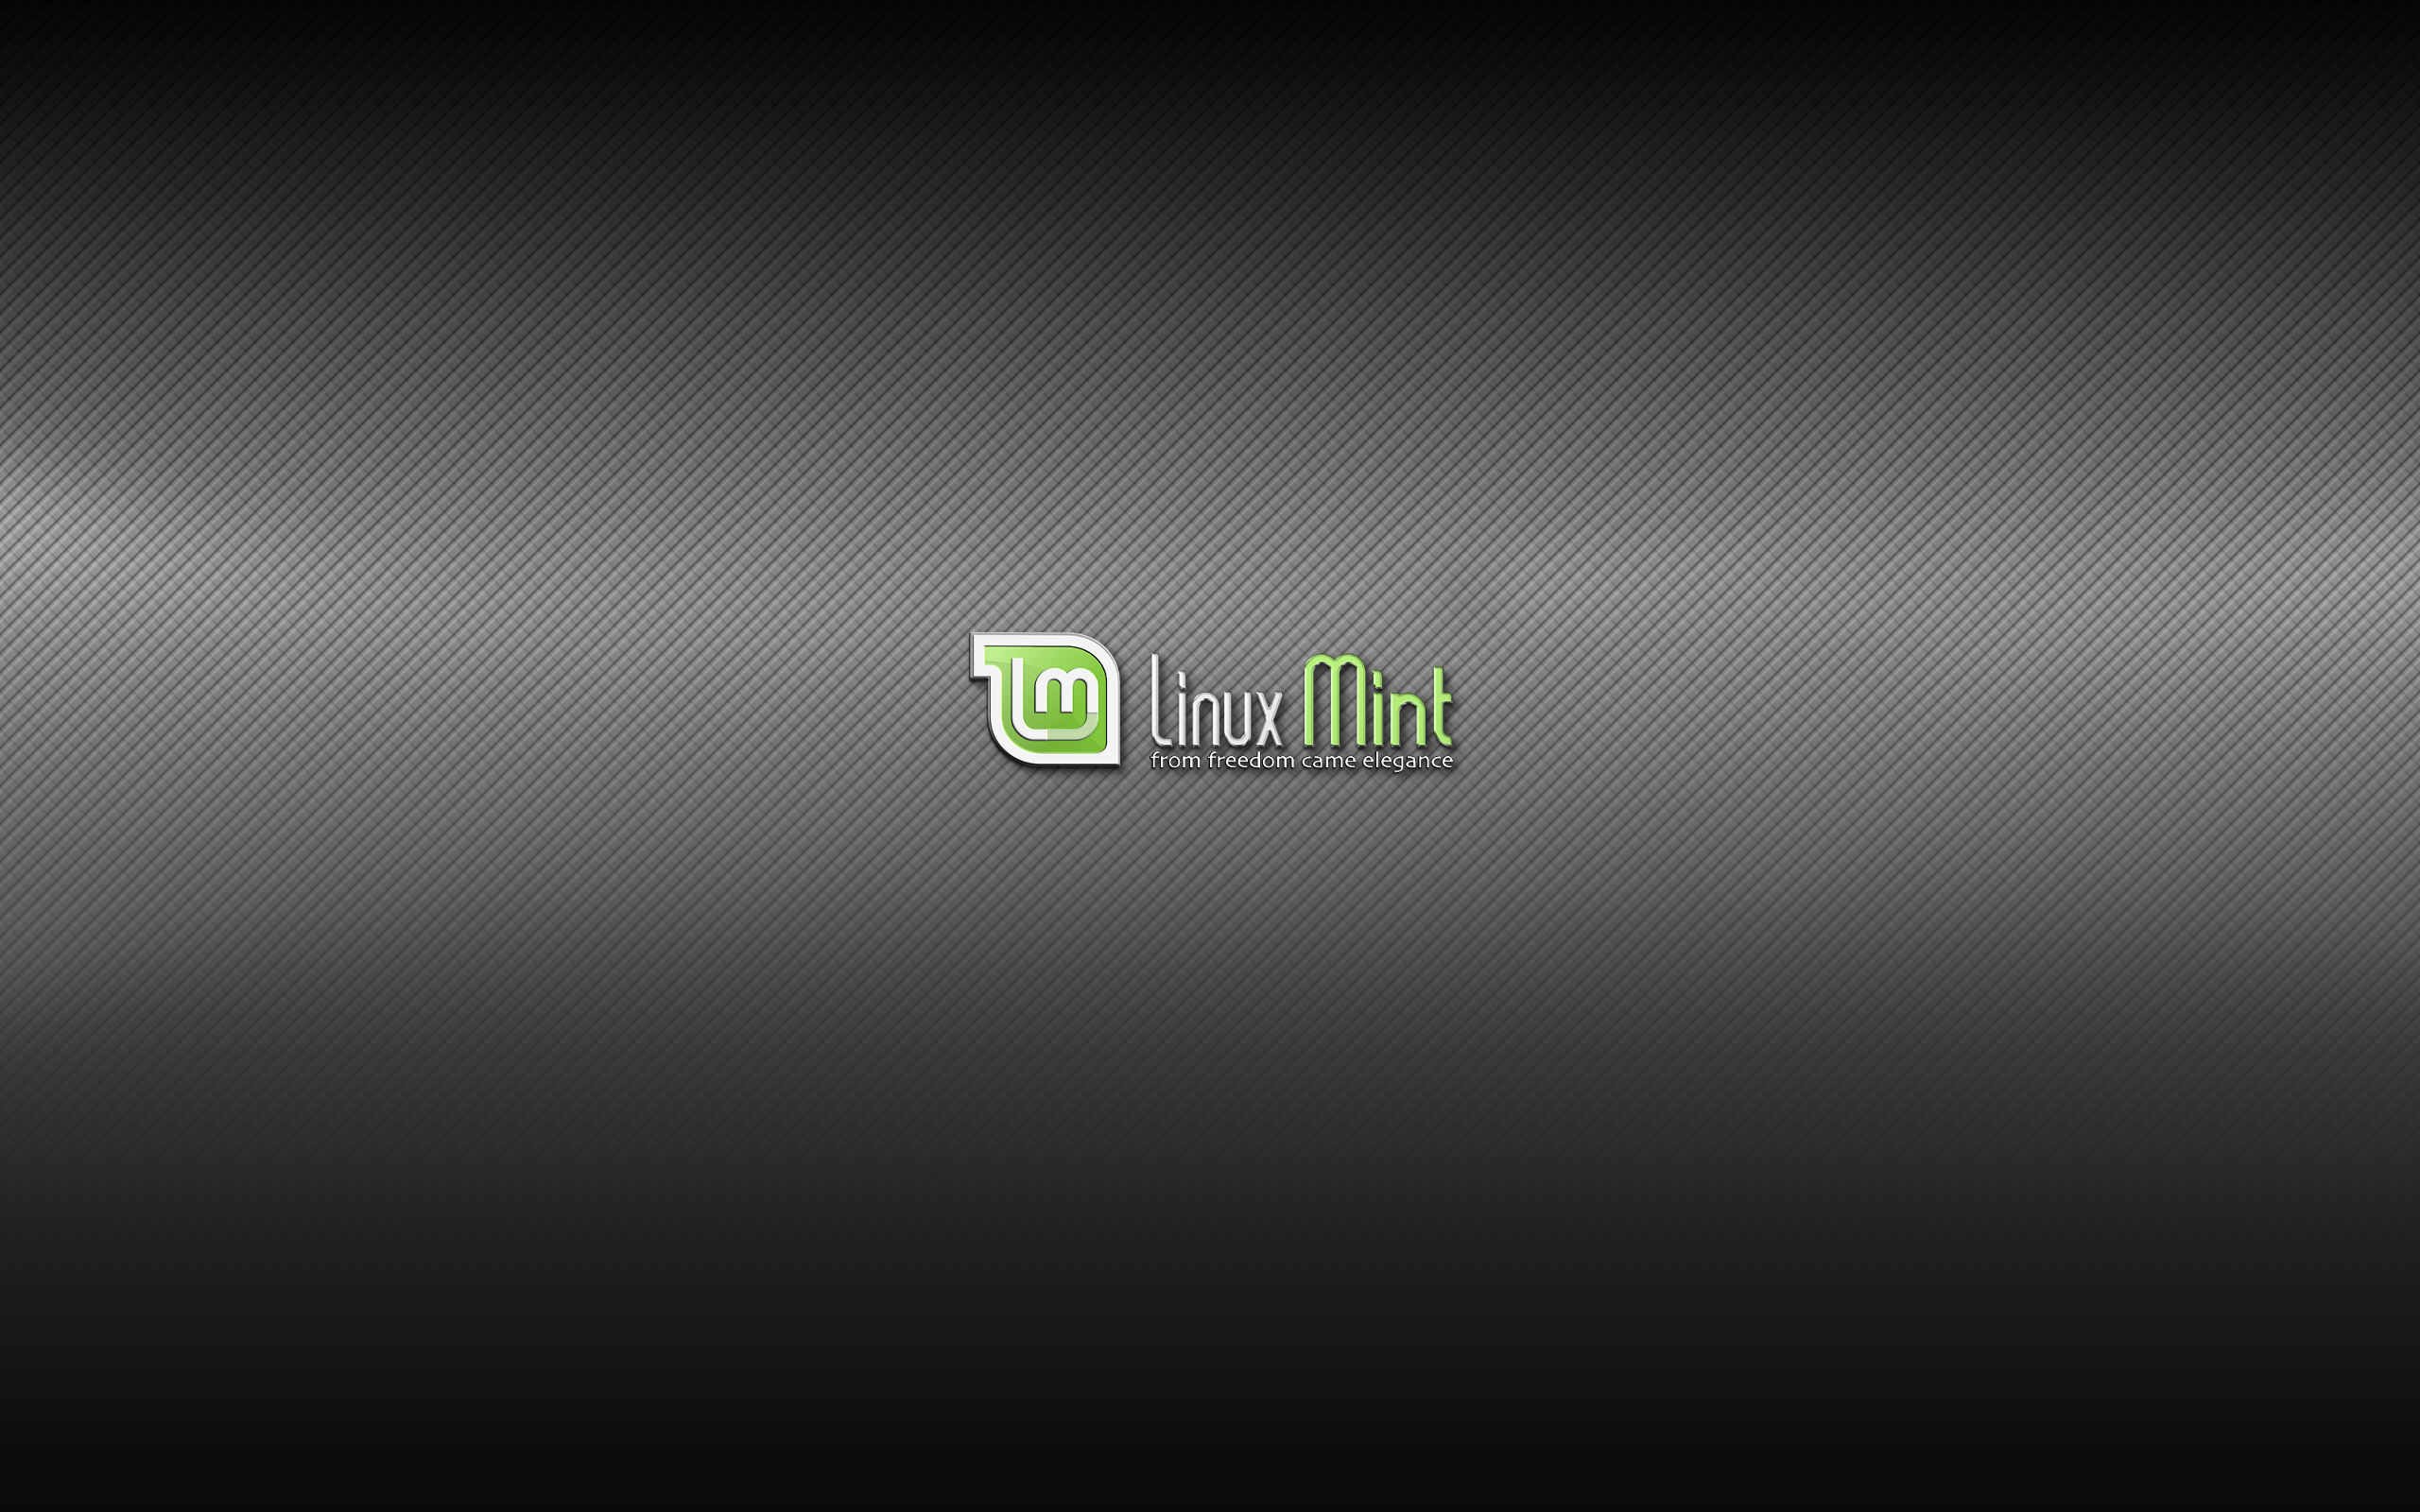 Linux Mint Wallpaper